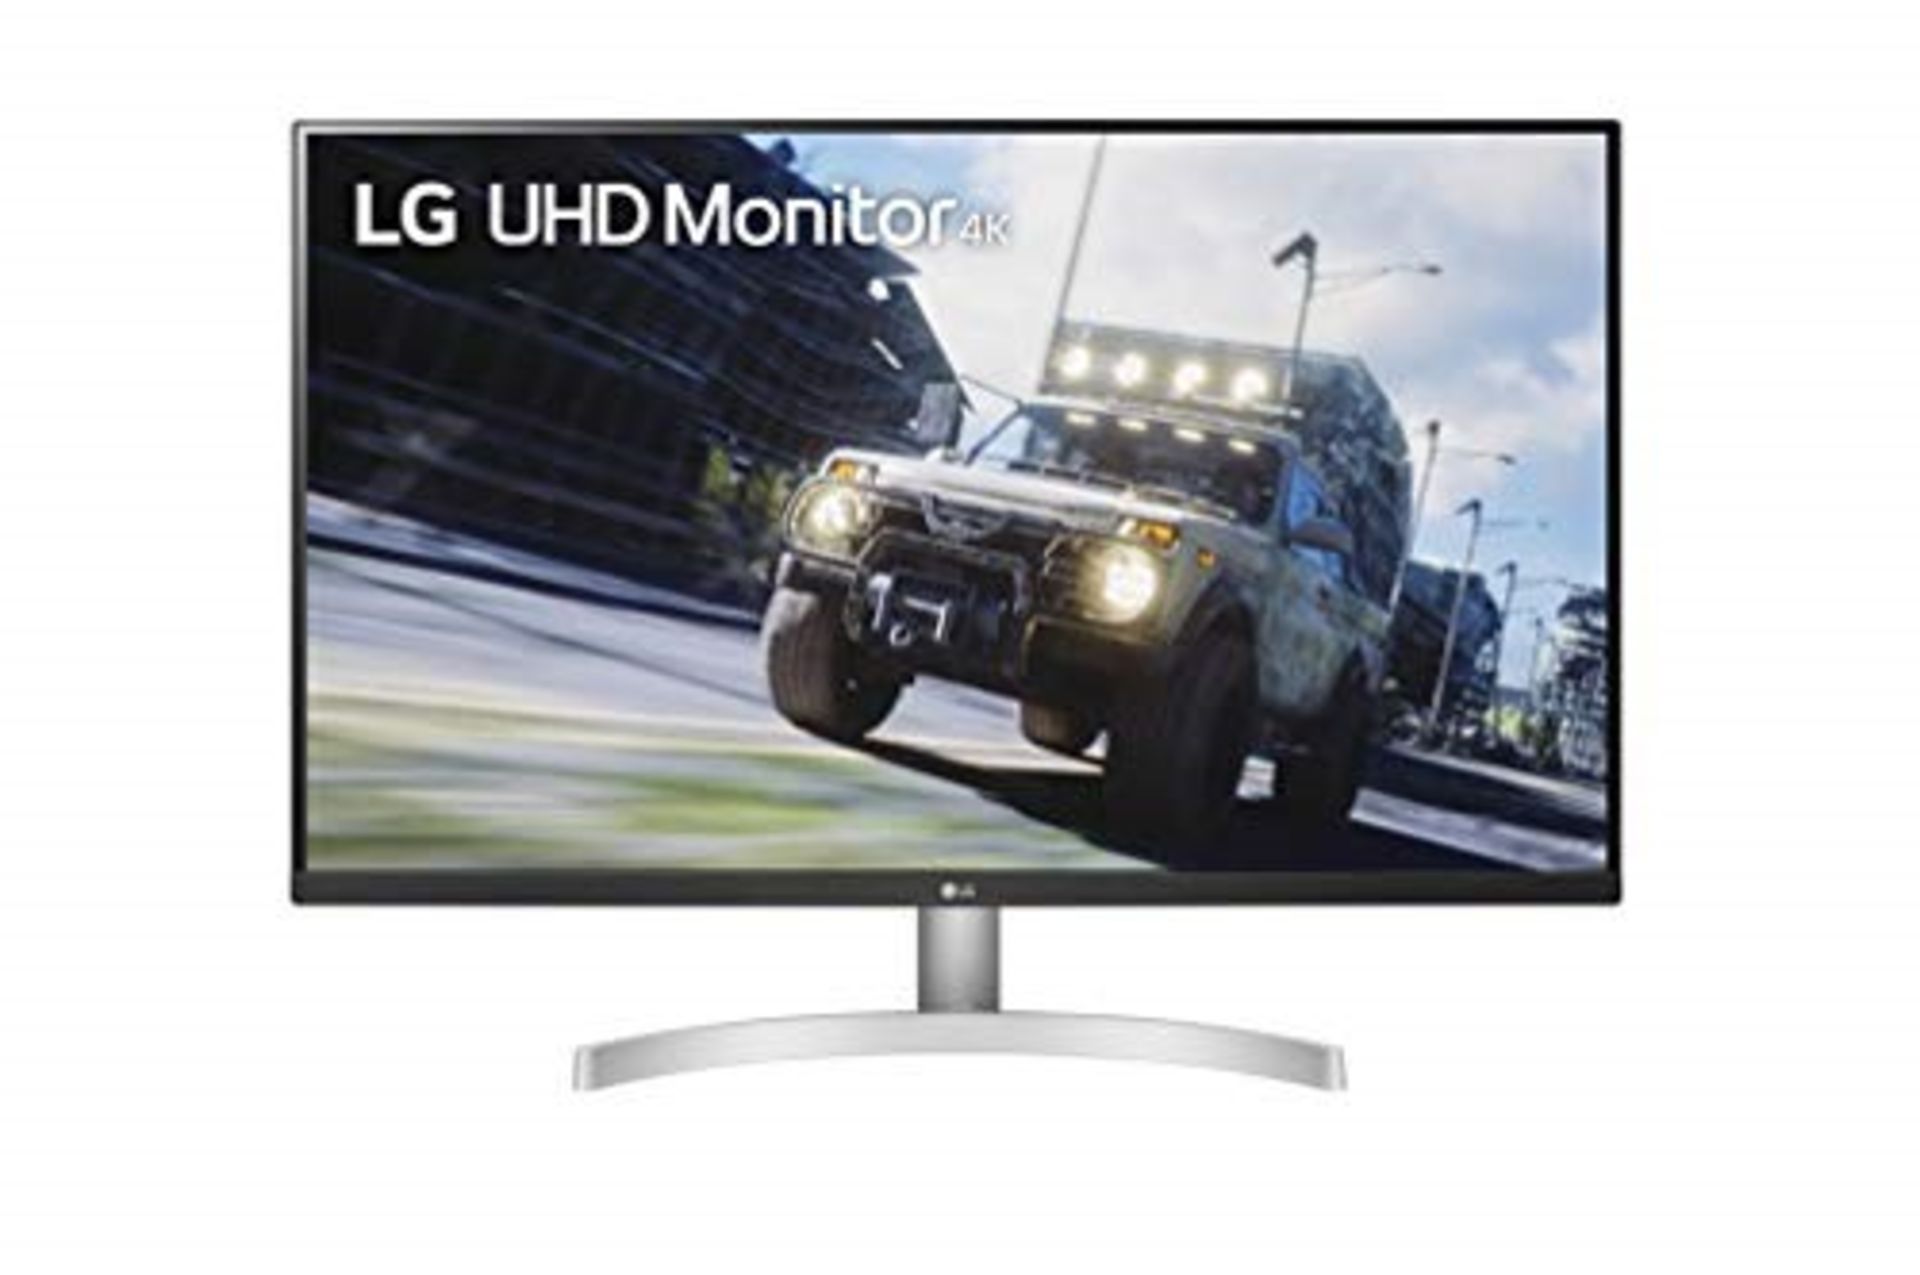 RRP £324.00 [BROKEN SCREEN] LG Electronics 32UN500 31.5 Inch UHD 4K HDR Monitor (3840 x 2160) - AM